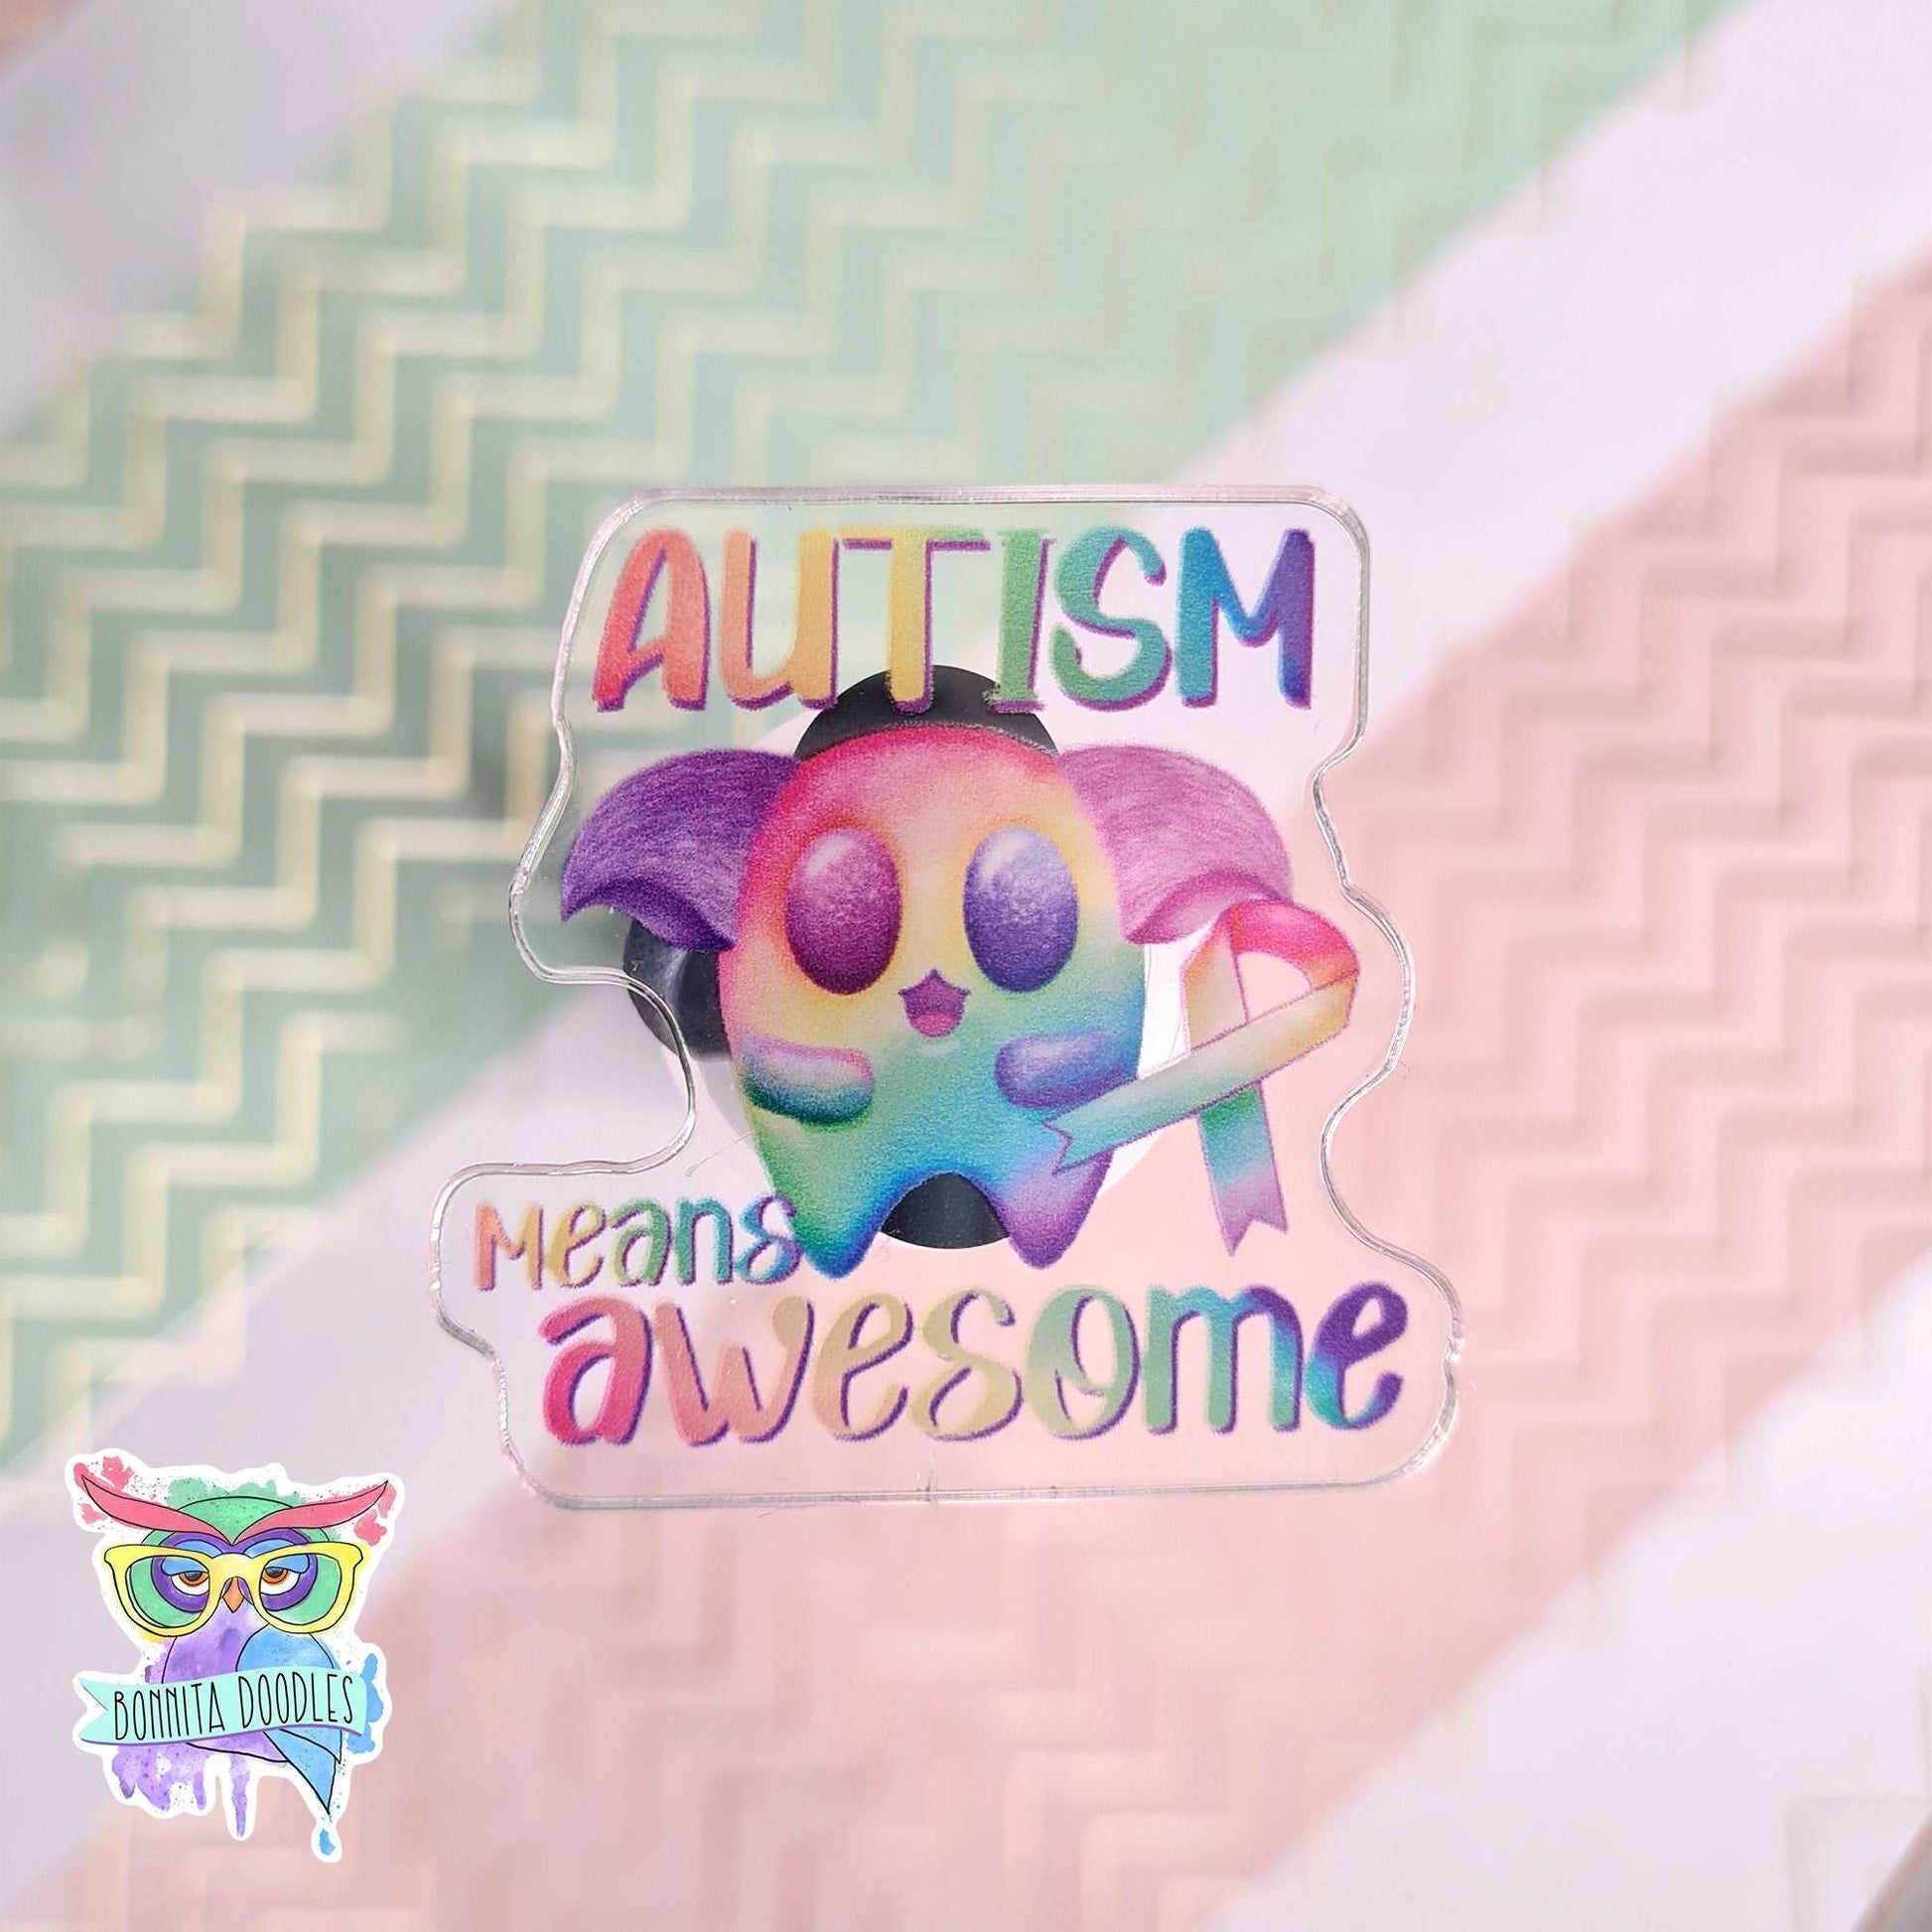 Autism awareness, alert pin badge